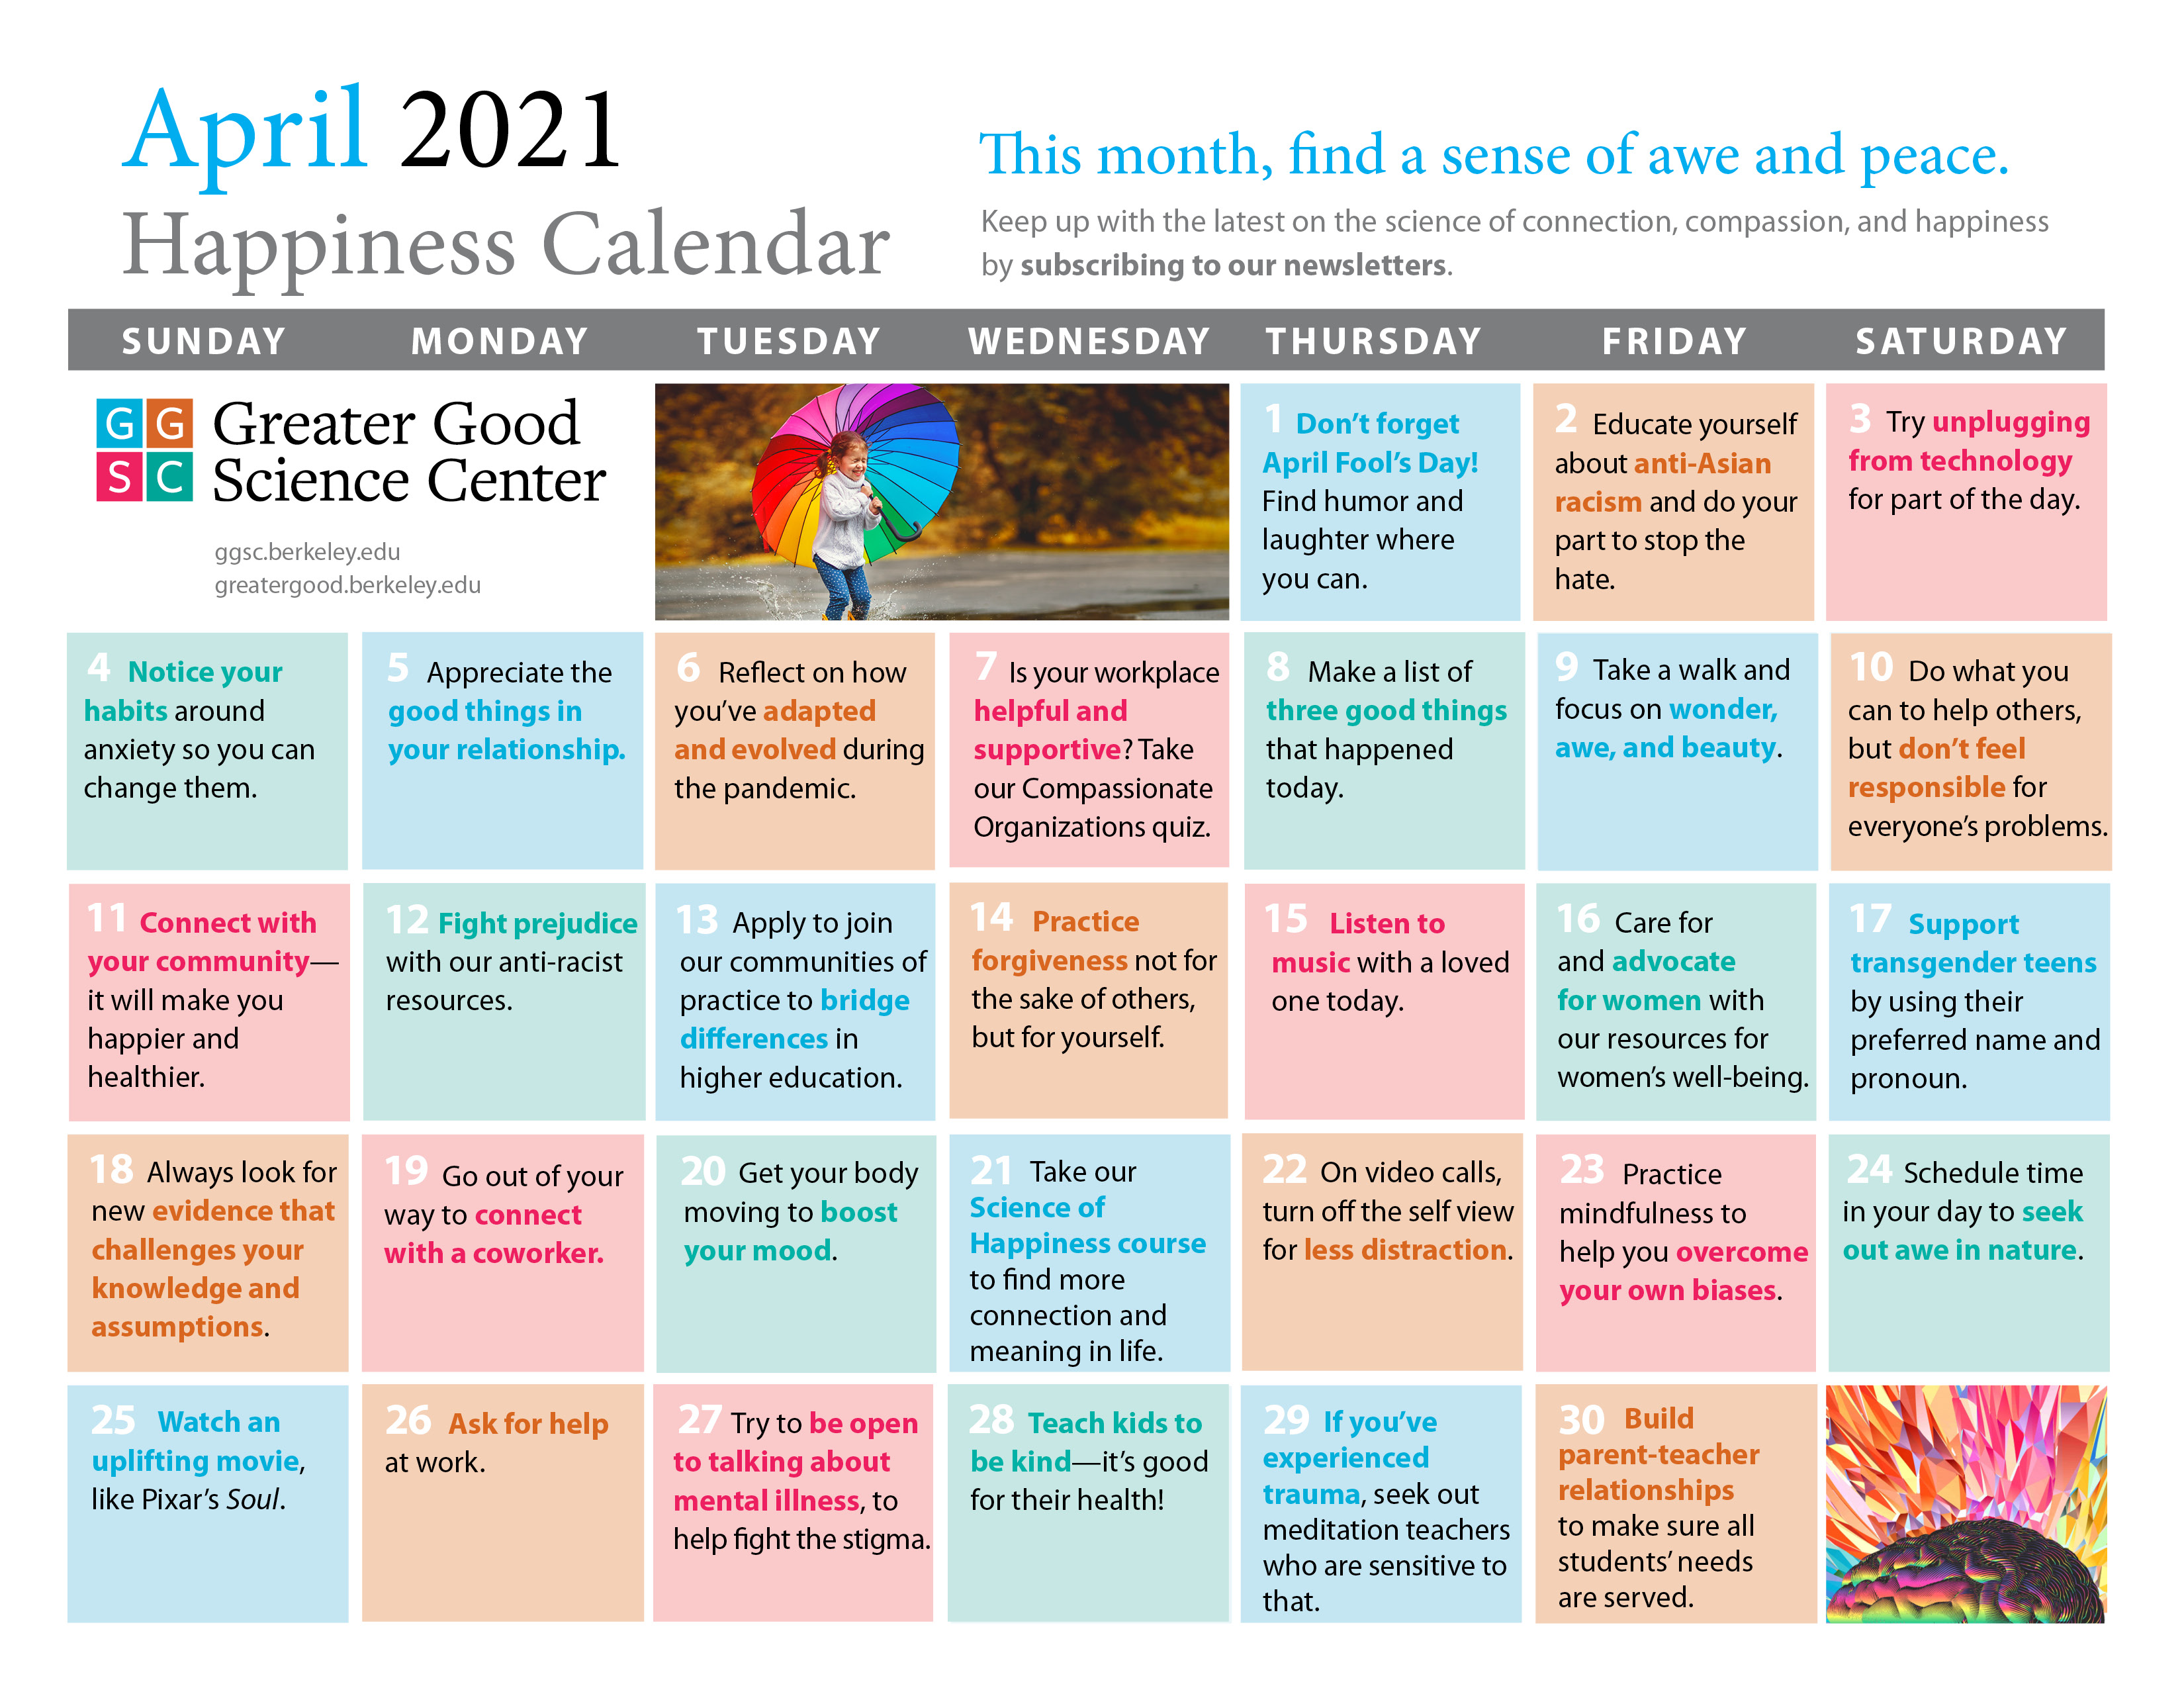 April happiness calendar